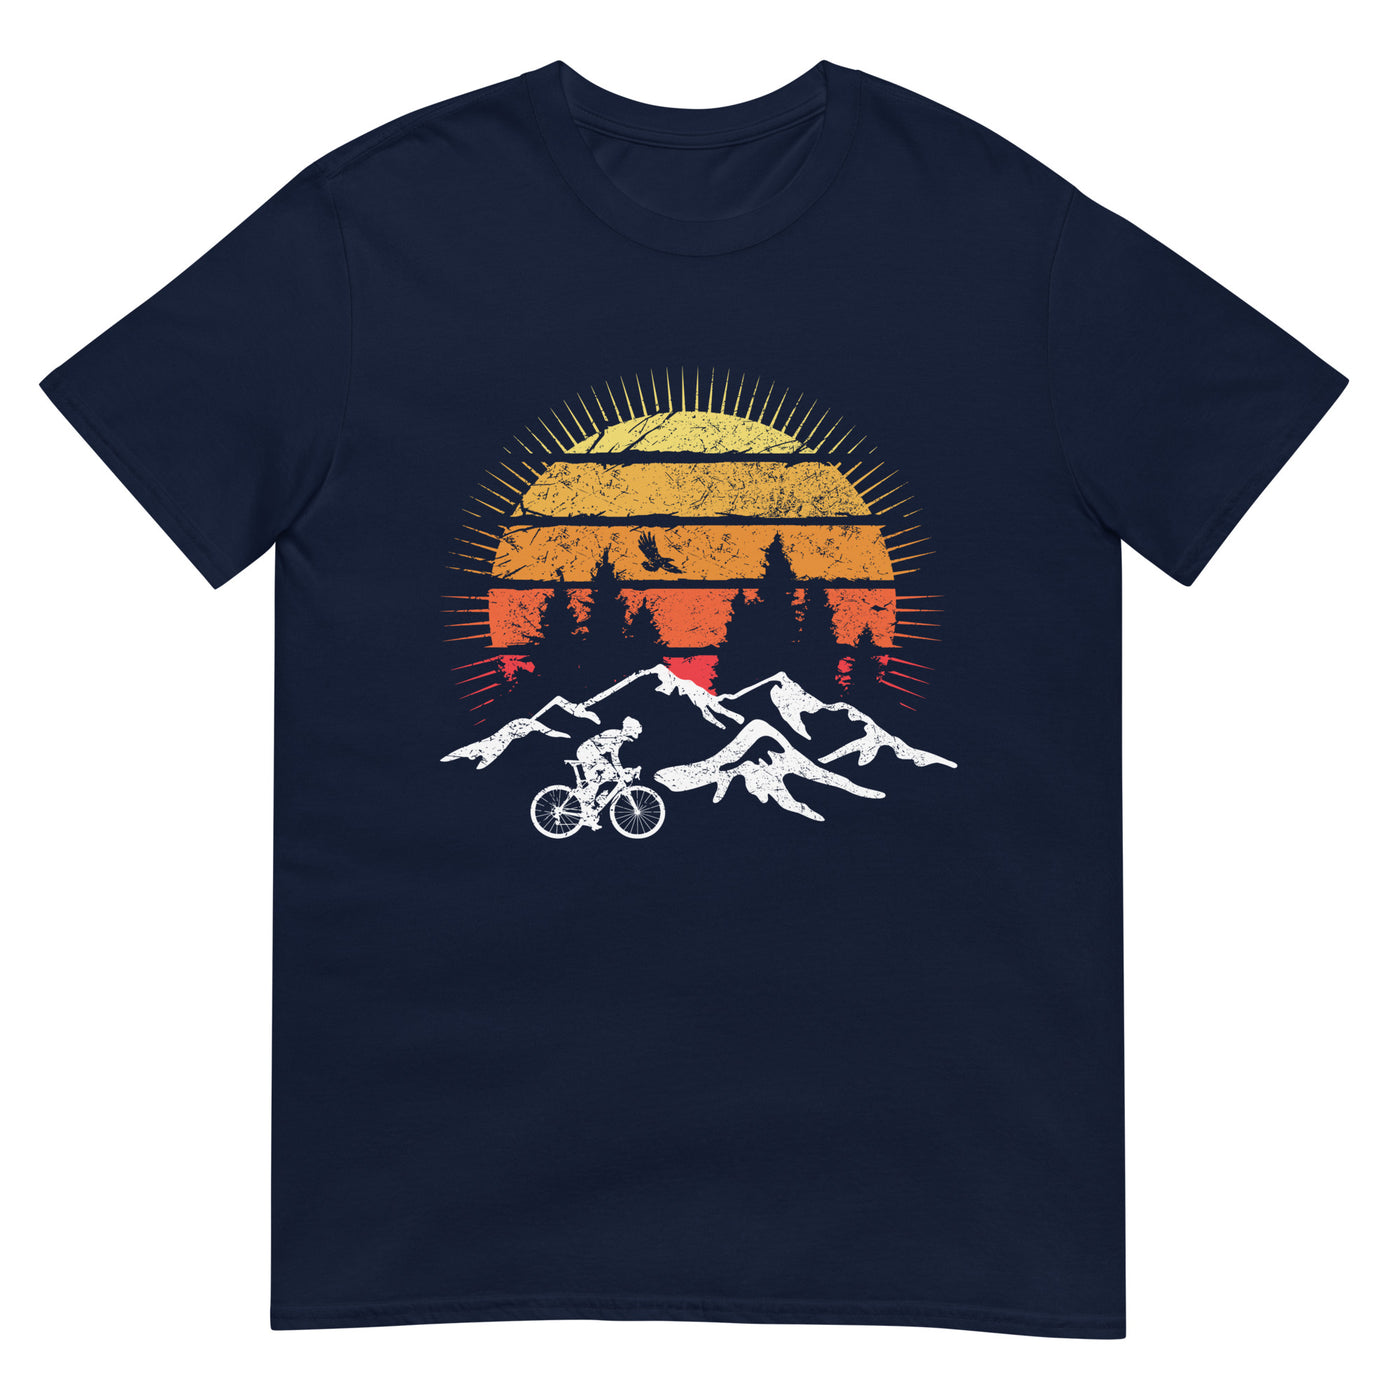 Radfahrer und Sonne Vintage - T-Shirt (Unisex) fahrrad xxx yyy zzz Navy